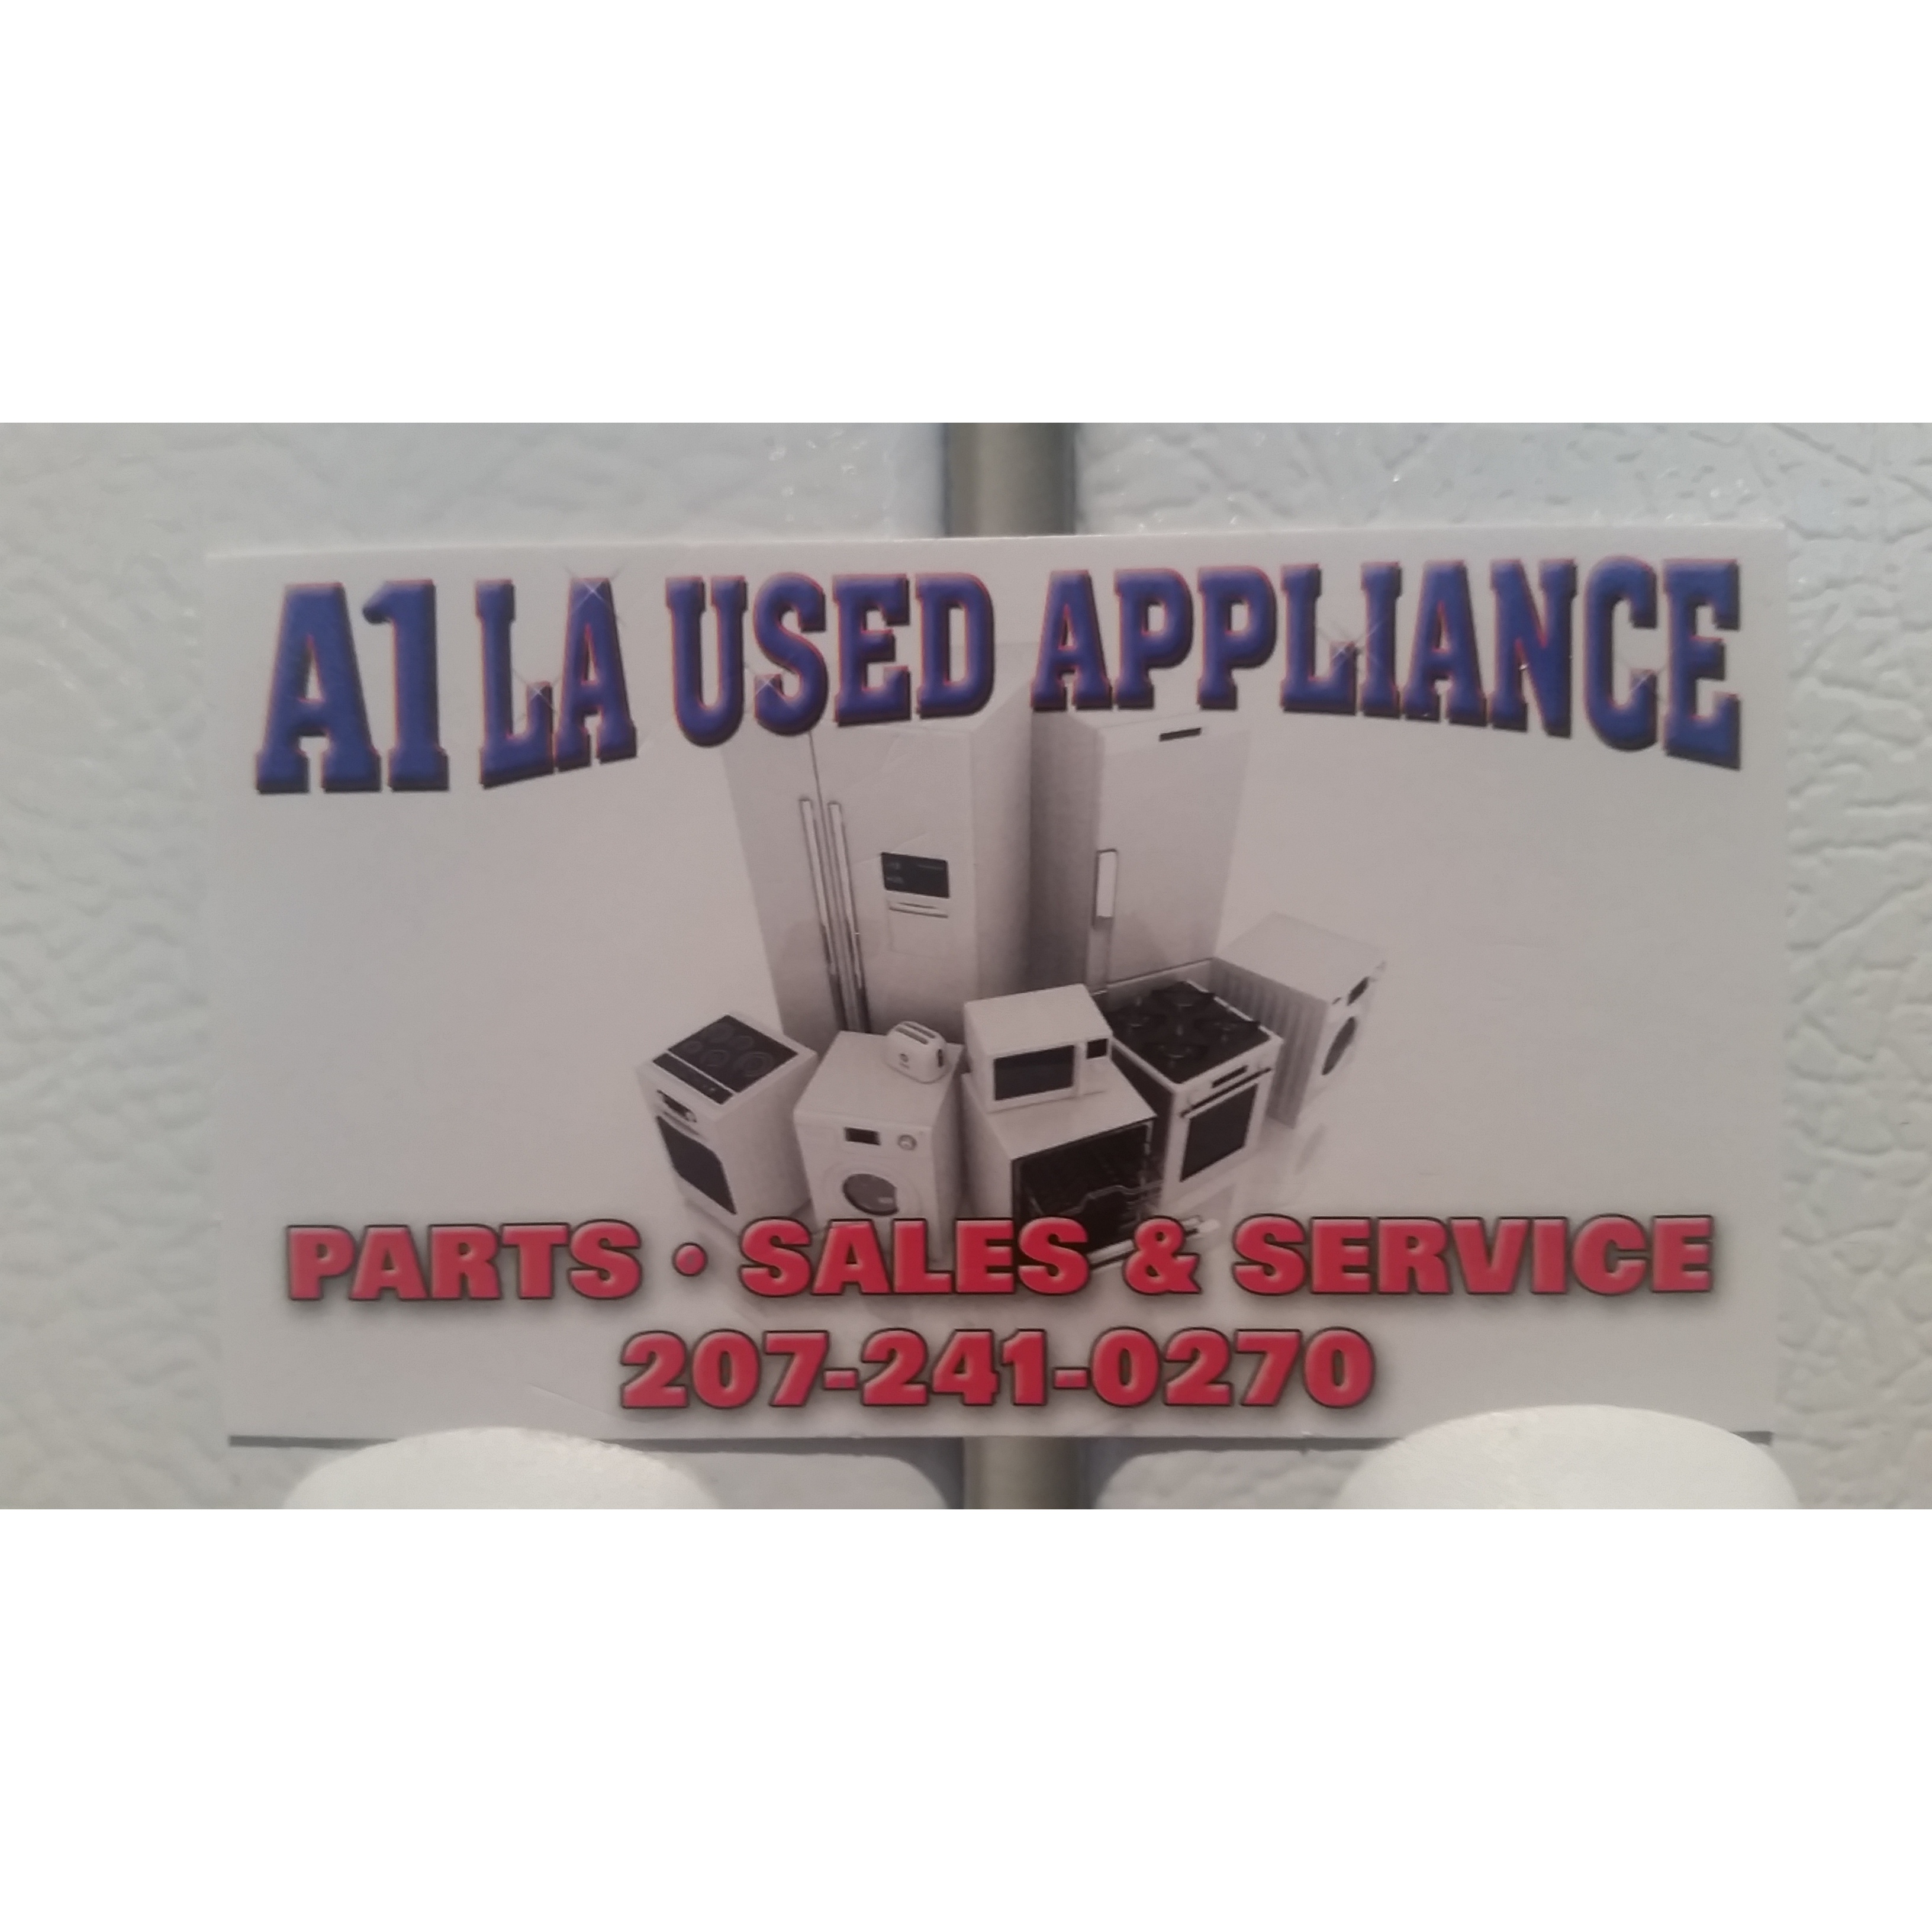 A1 LA Used Appliance Photo